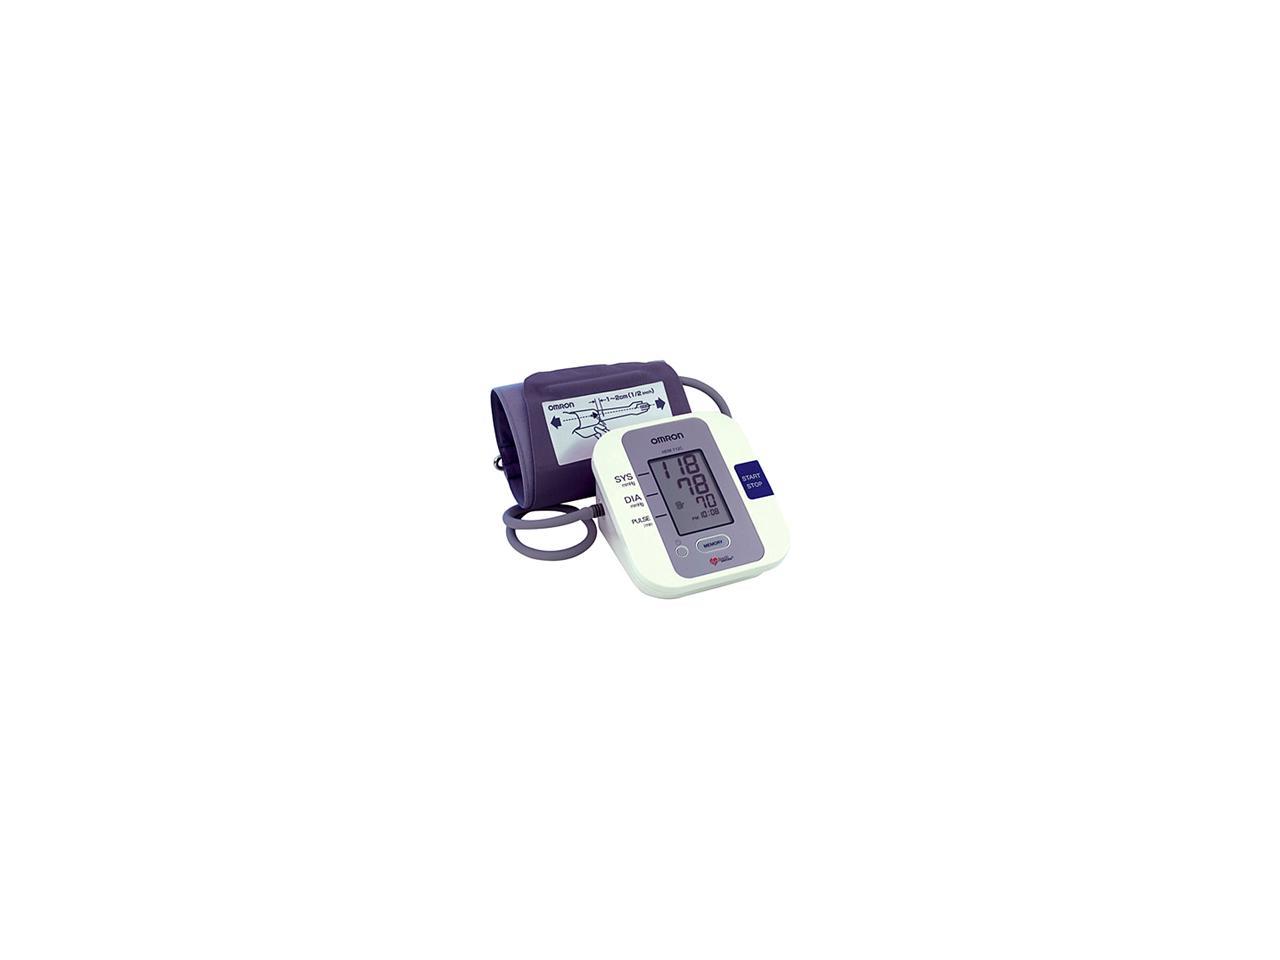 Omron Hem 712clc Automatic Blood Pressure Monitor Wlarge Cuff